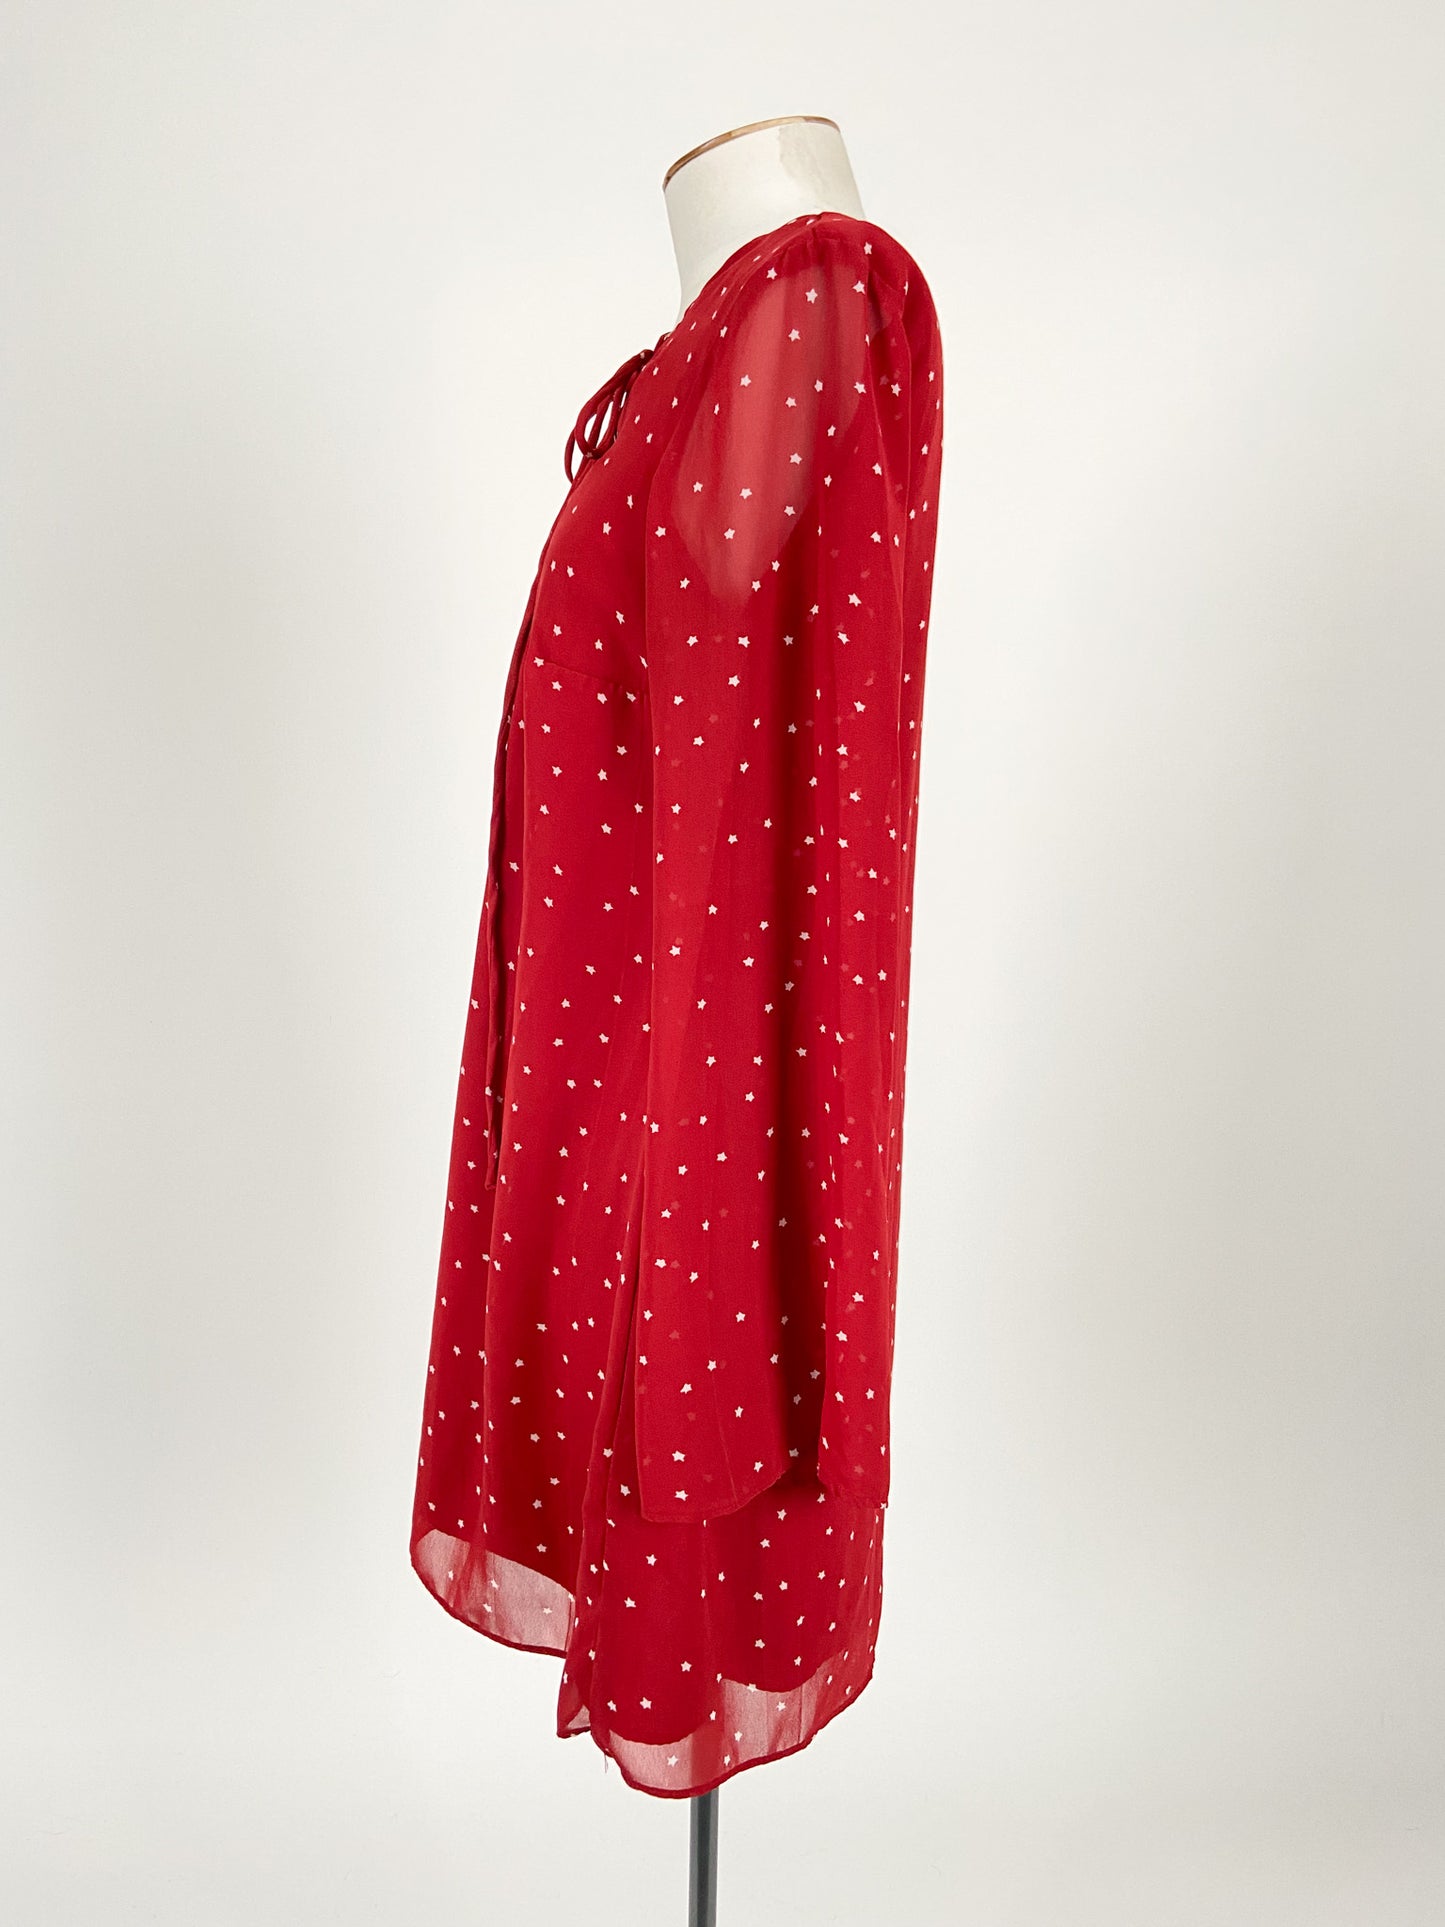 ASOS | Red Cocktail/Formal Dress | Size 10